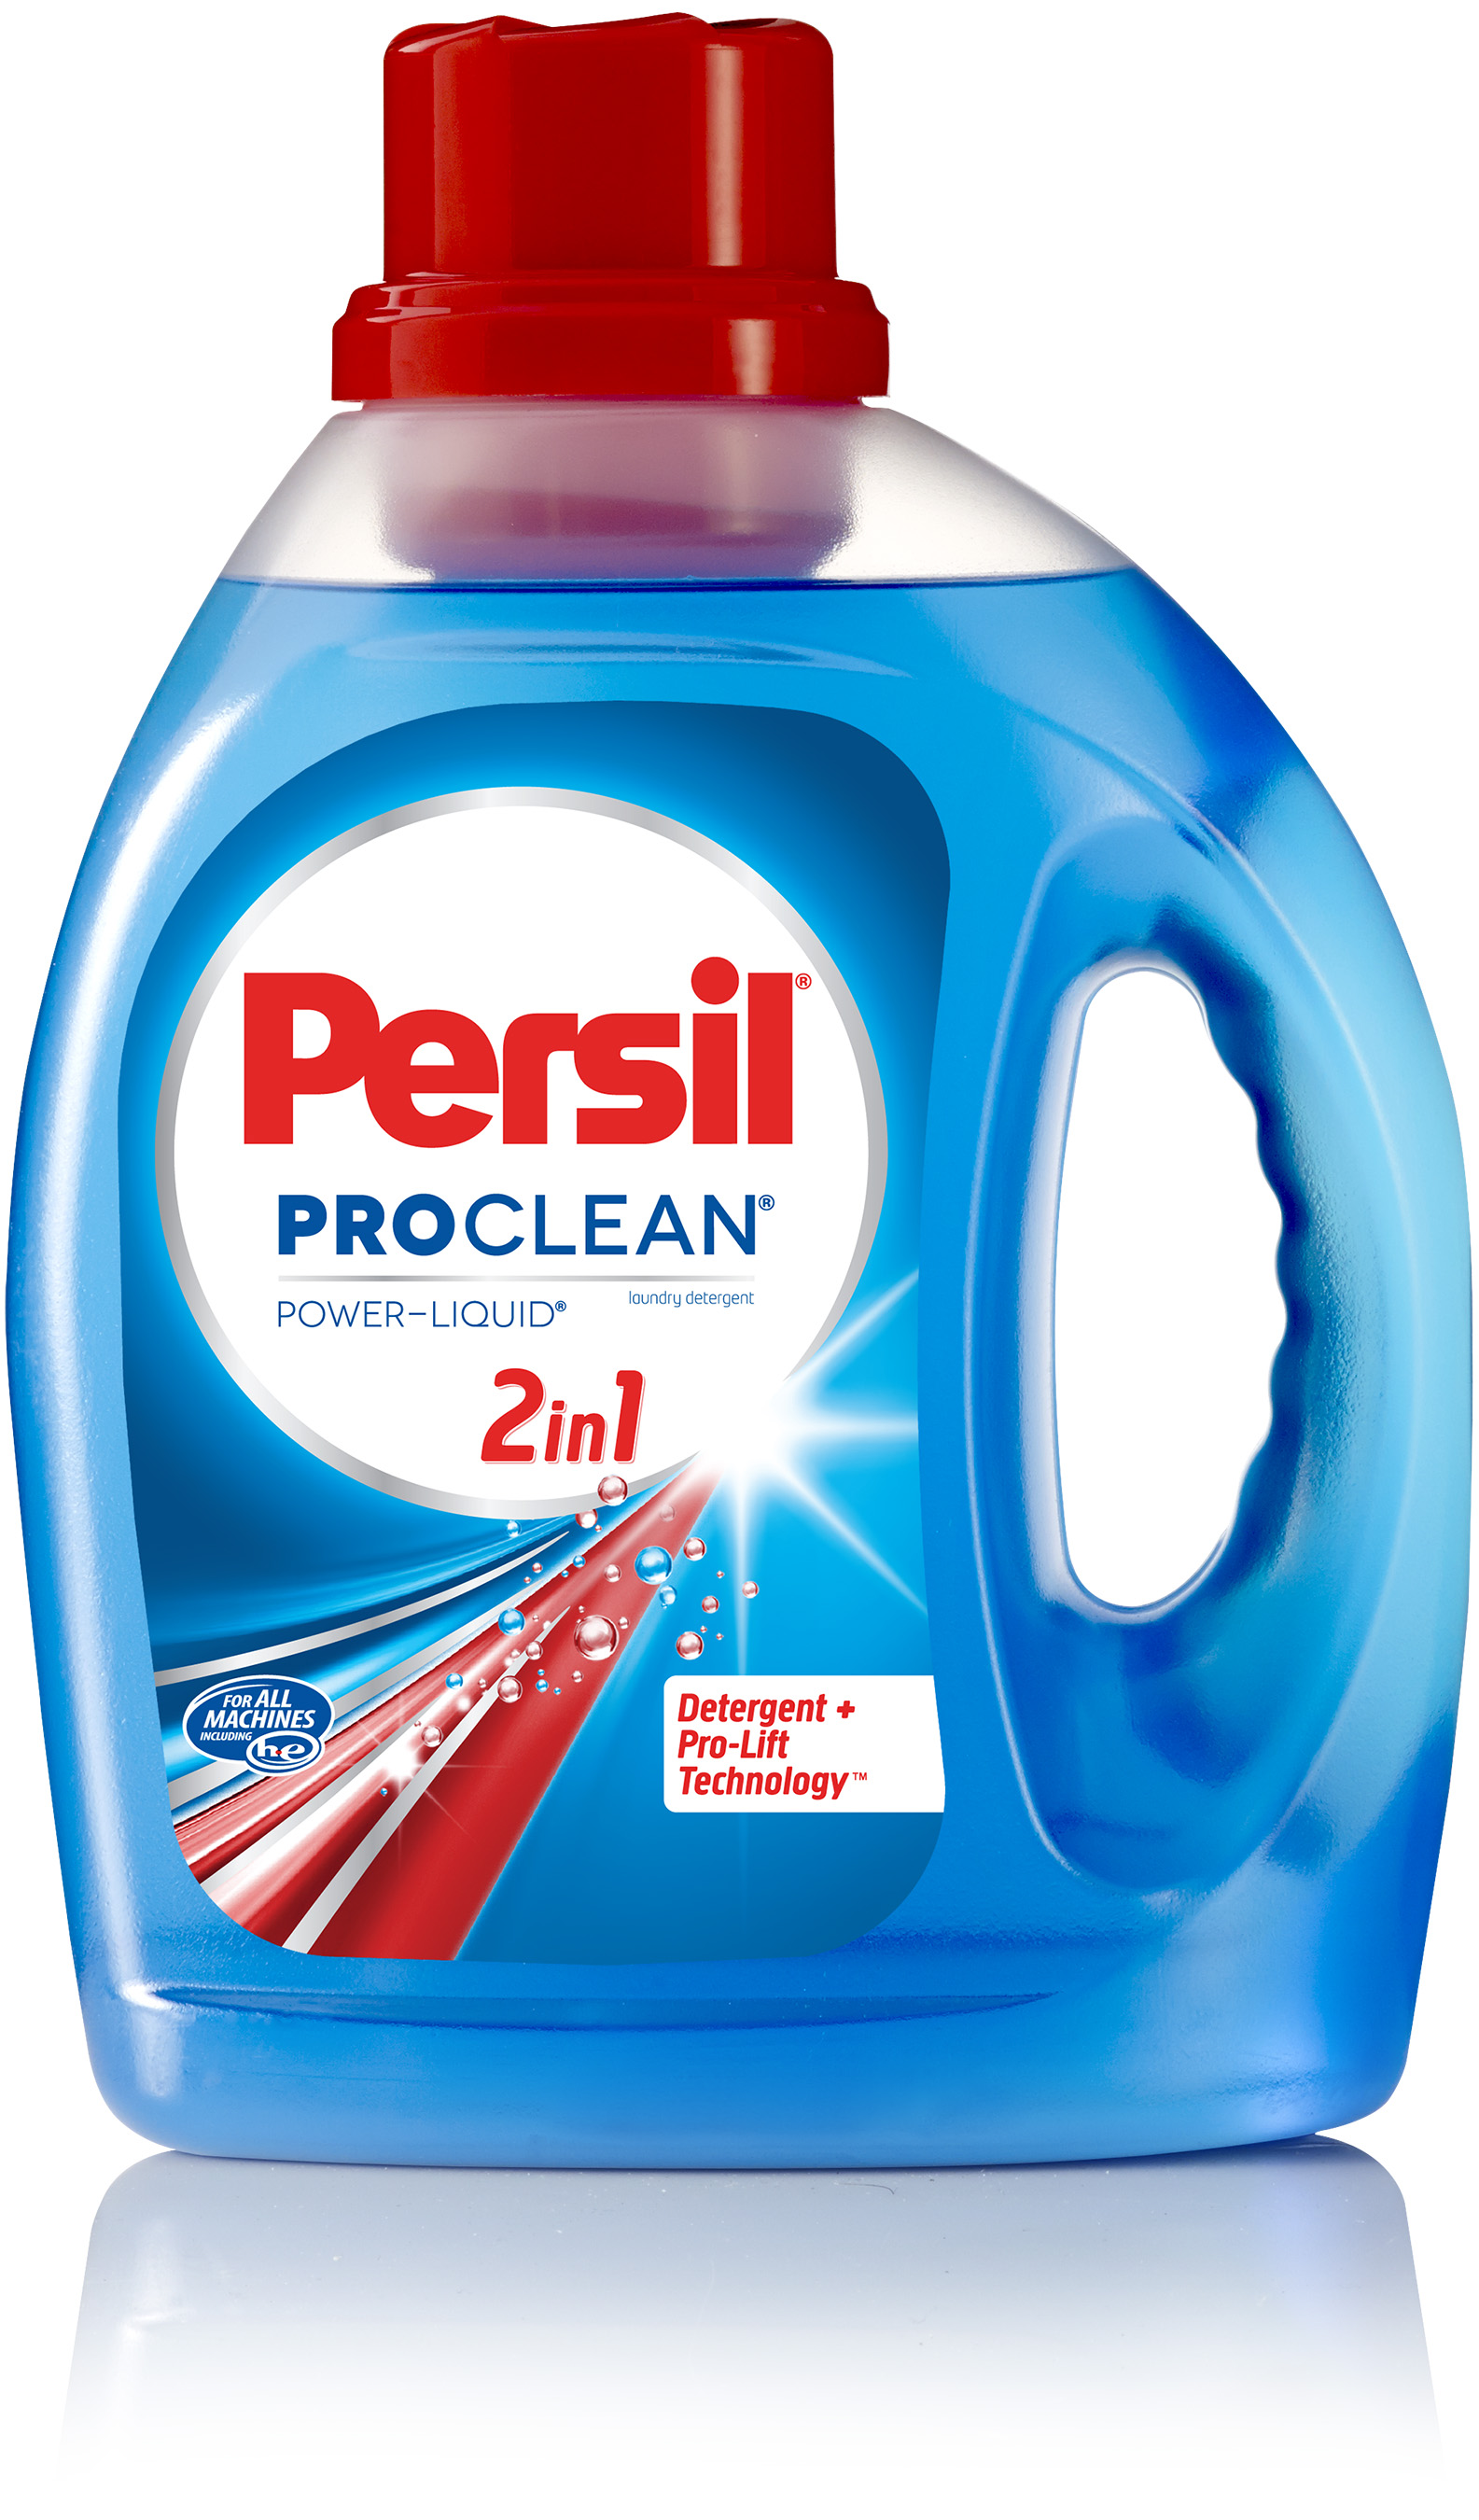 Henkel’s Persil® ProClean®, Releases FirstEver Super Bowl® Commercial